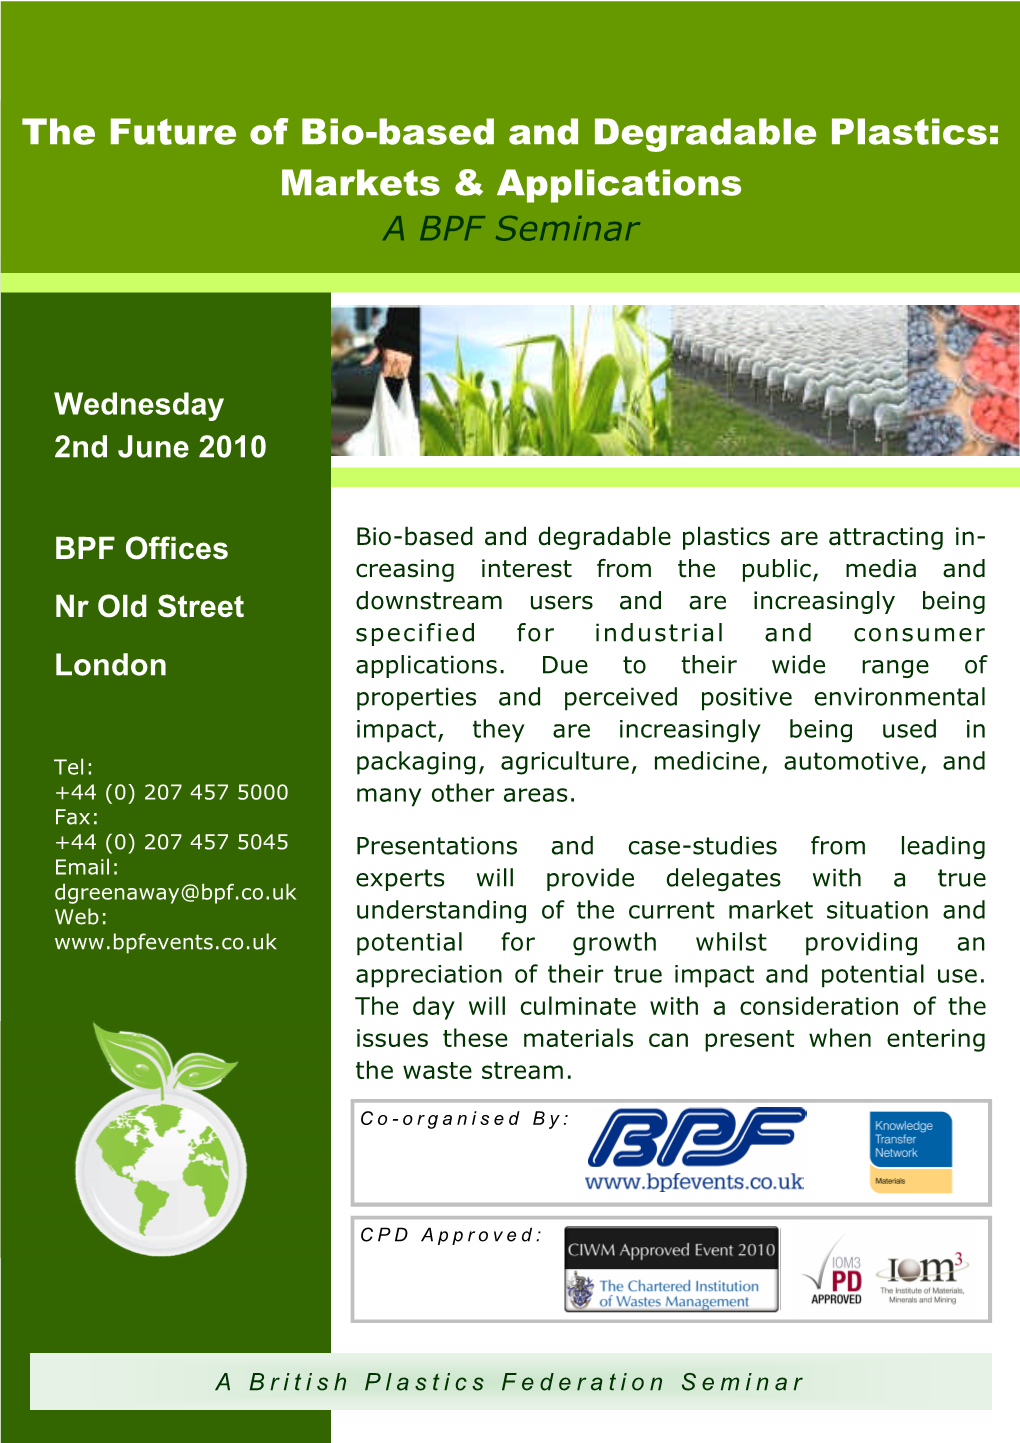 The Future of Bio-Based and Degradable Plastics: Markets & Applications a BPF Seminar